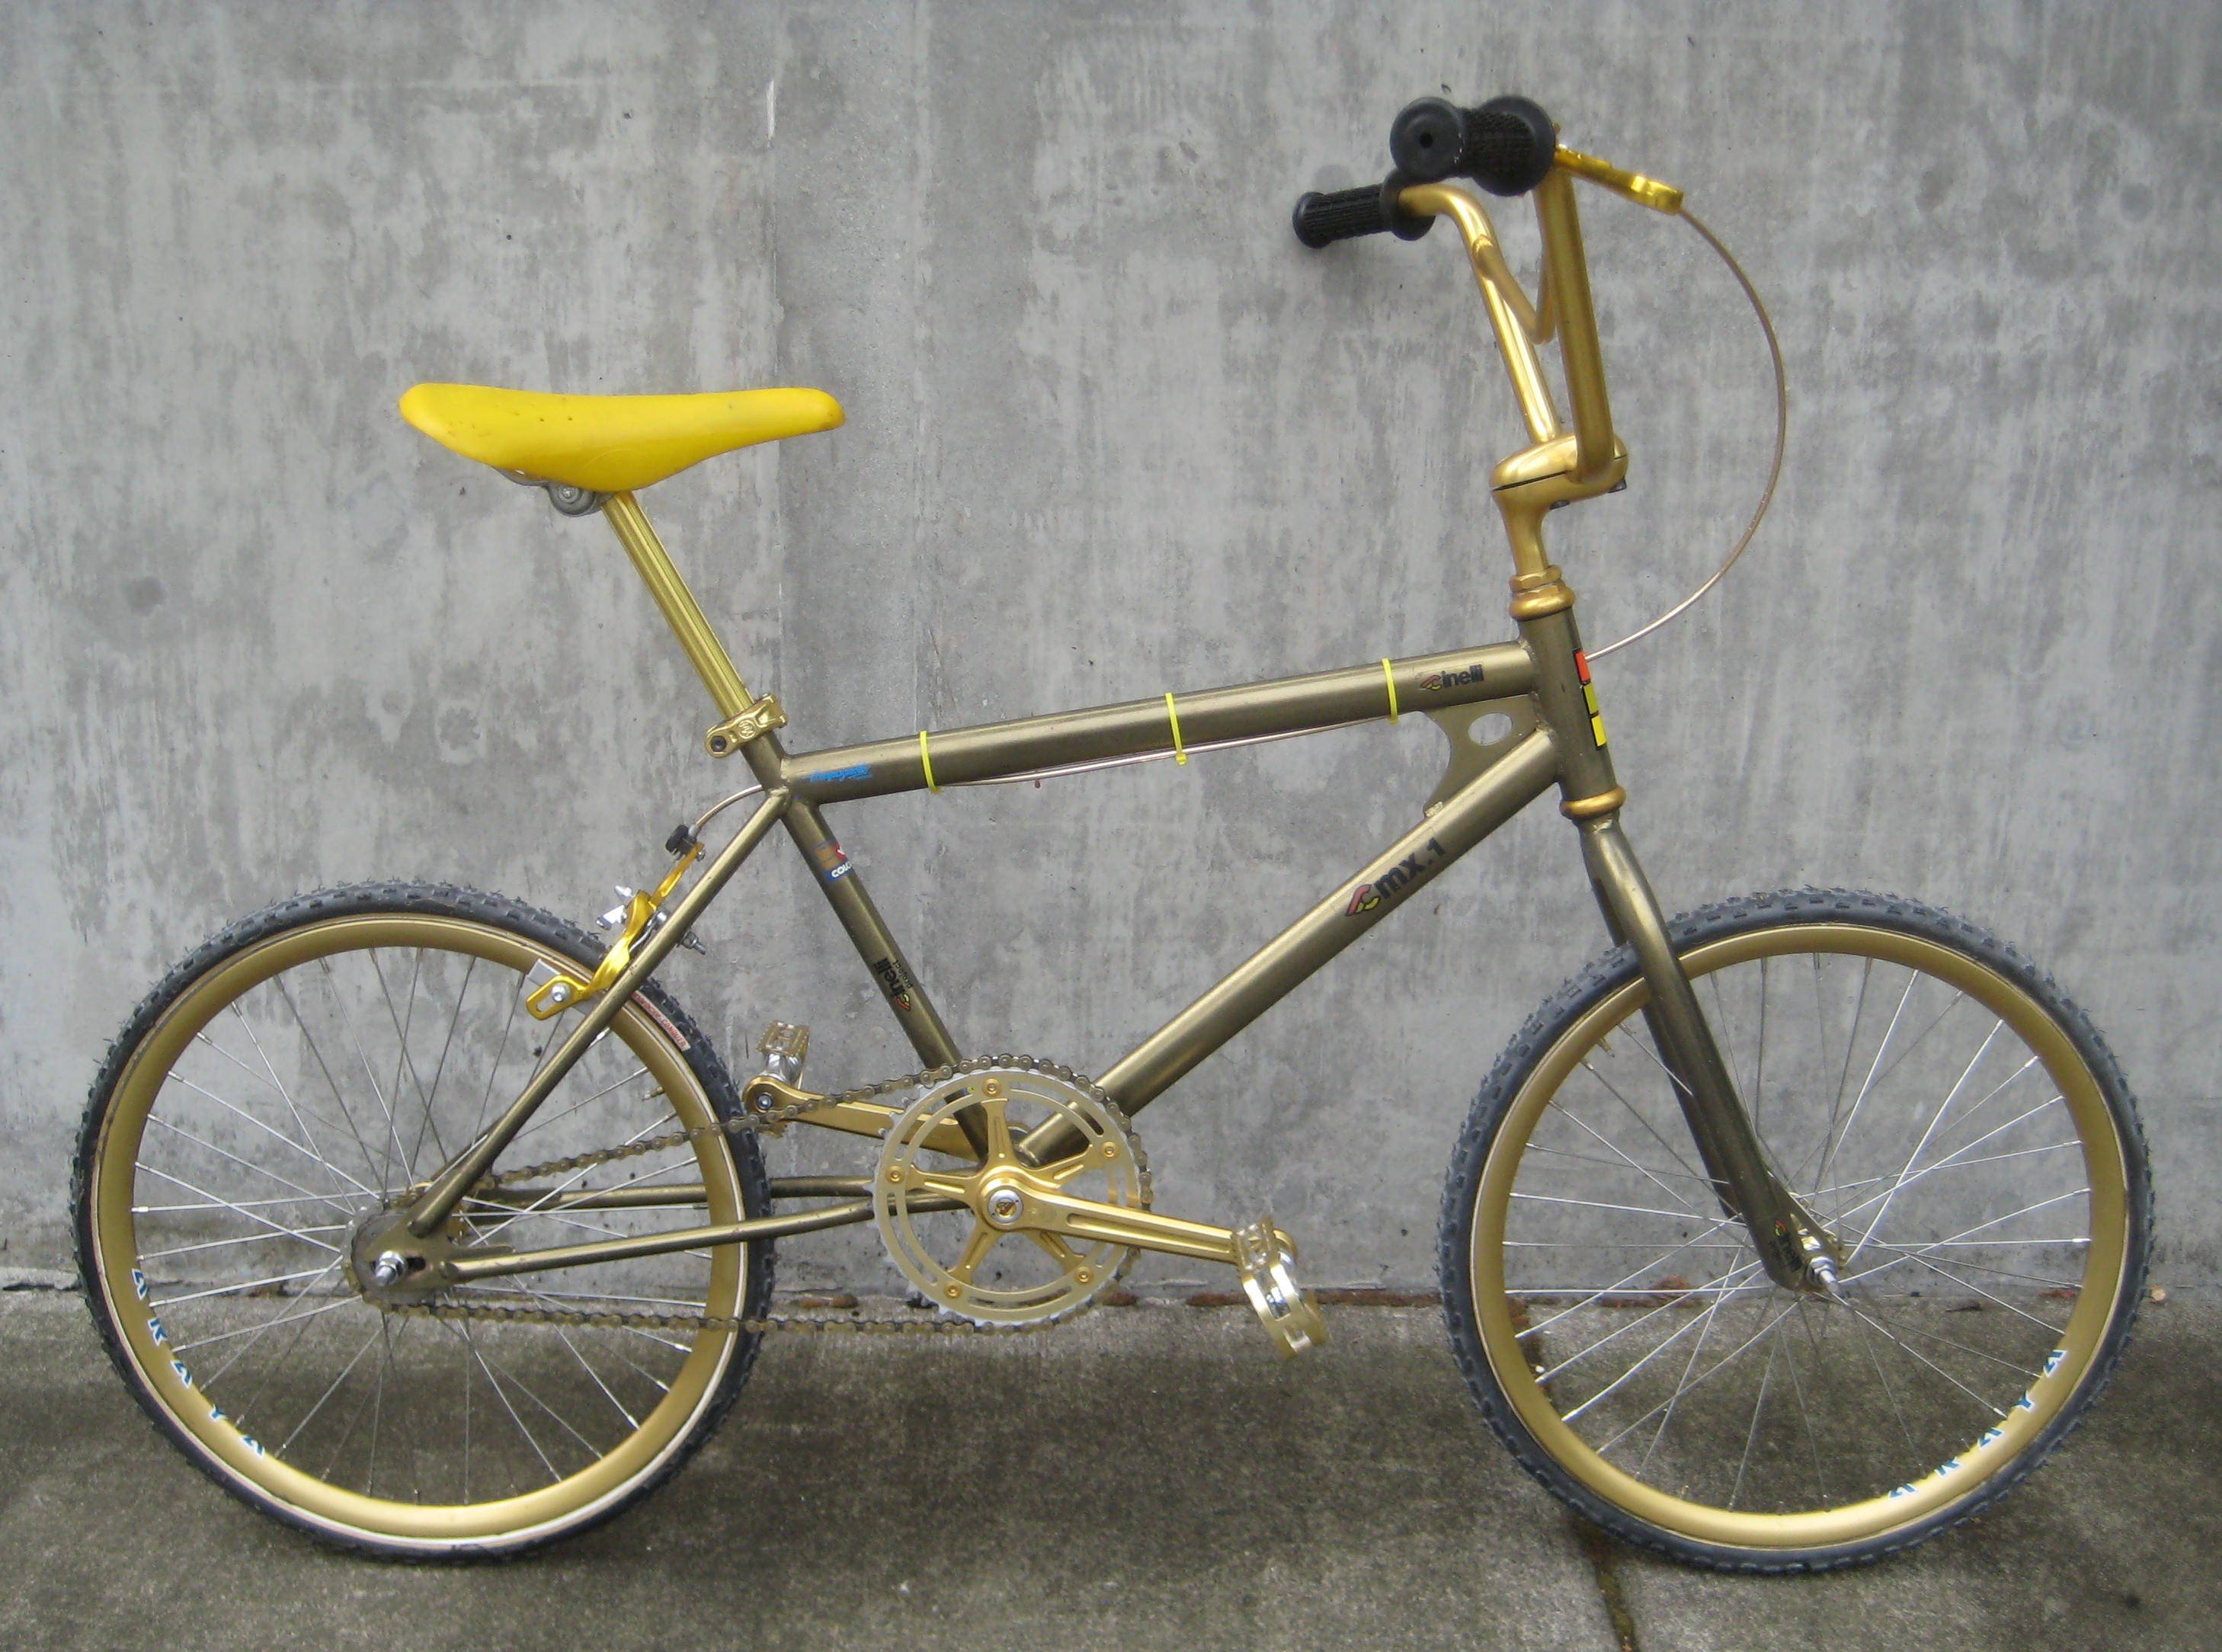 1980 Cinelli bike at Classic Cycle | Classic Cycle Bainbridge Island County